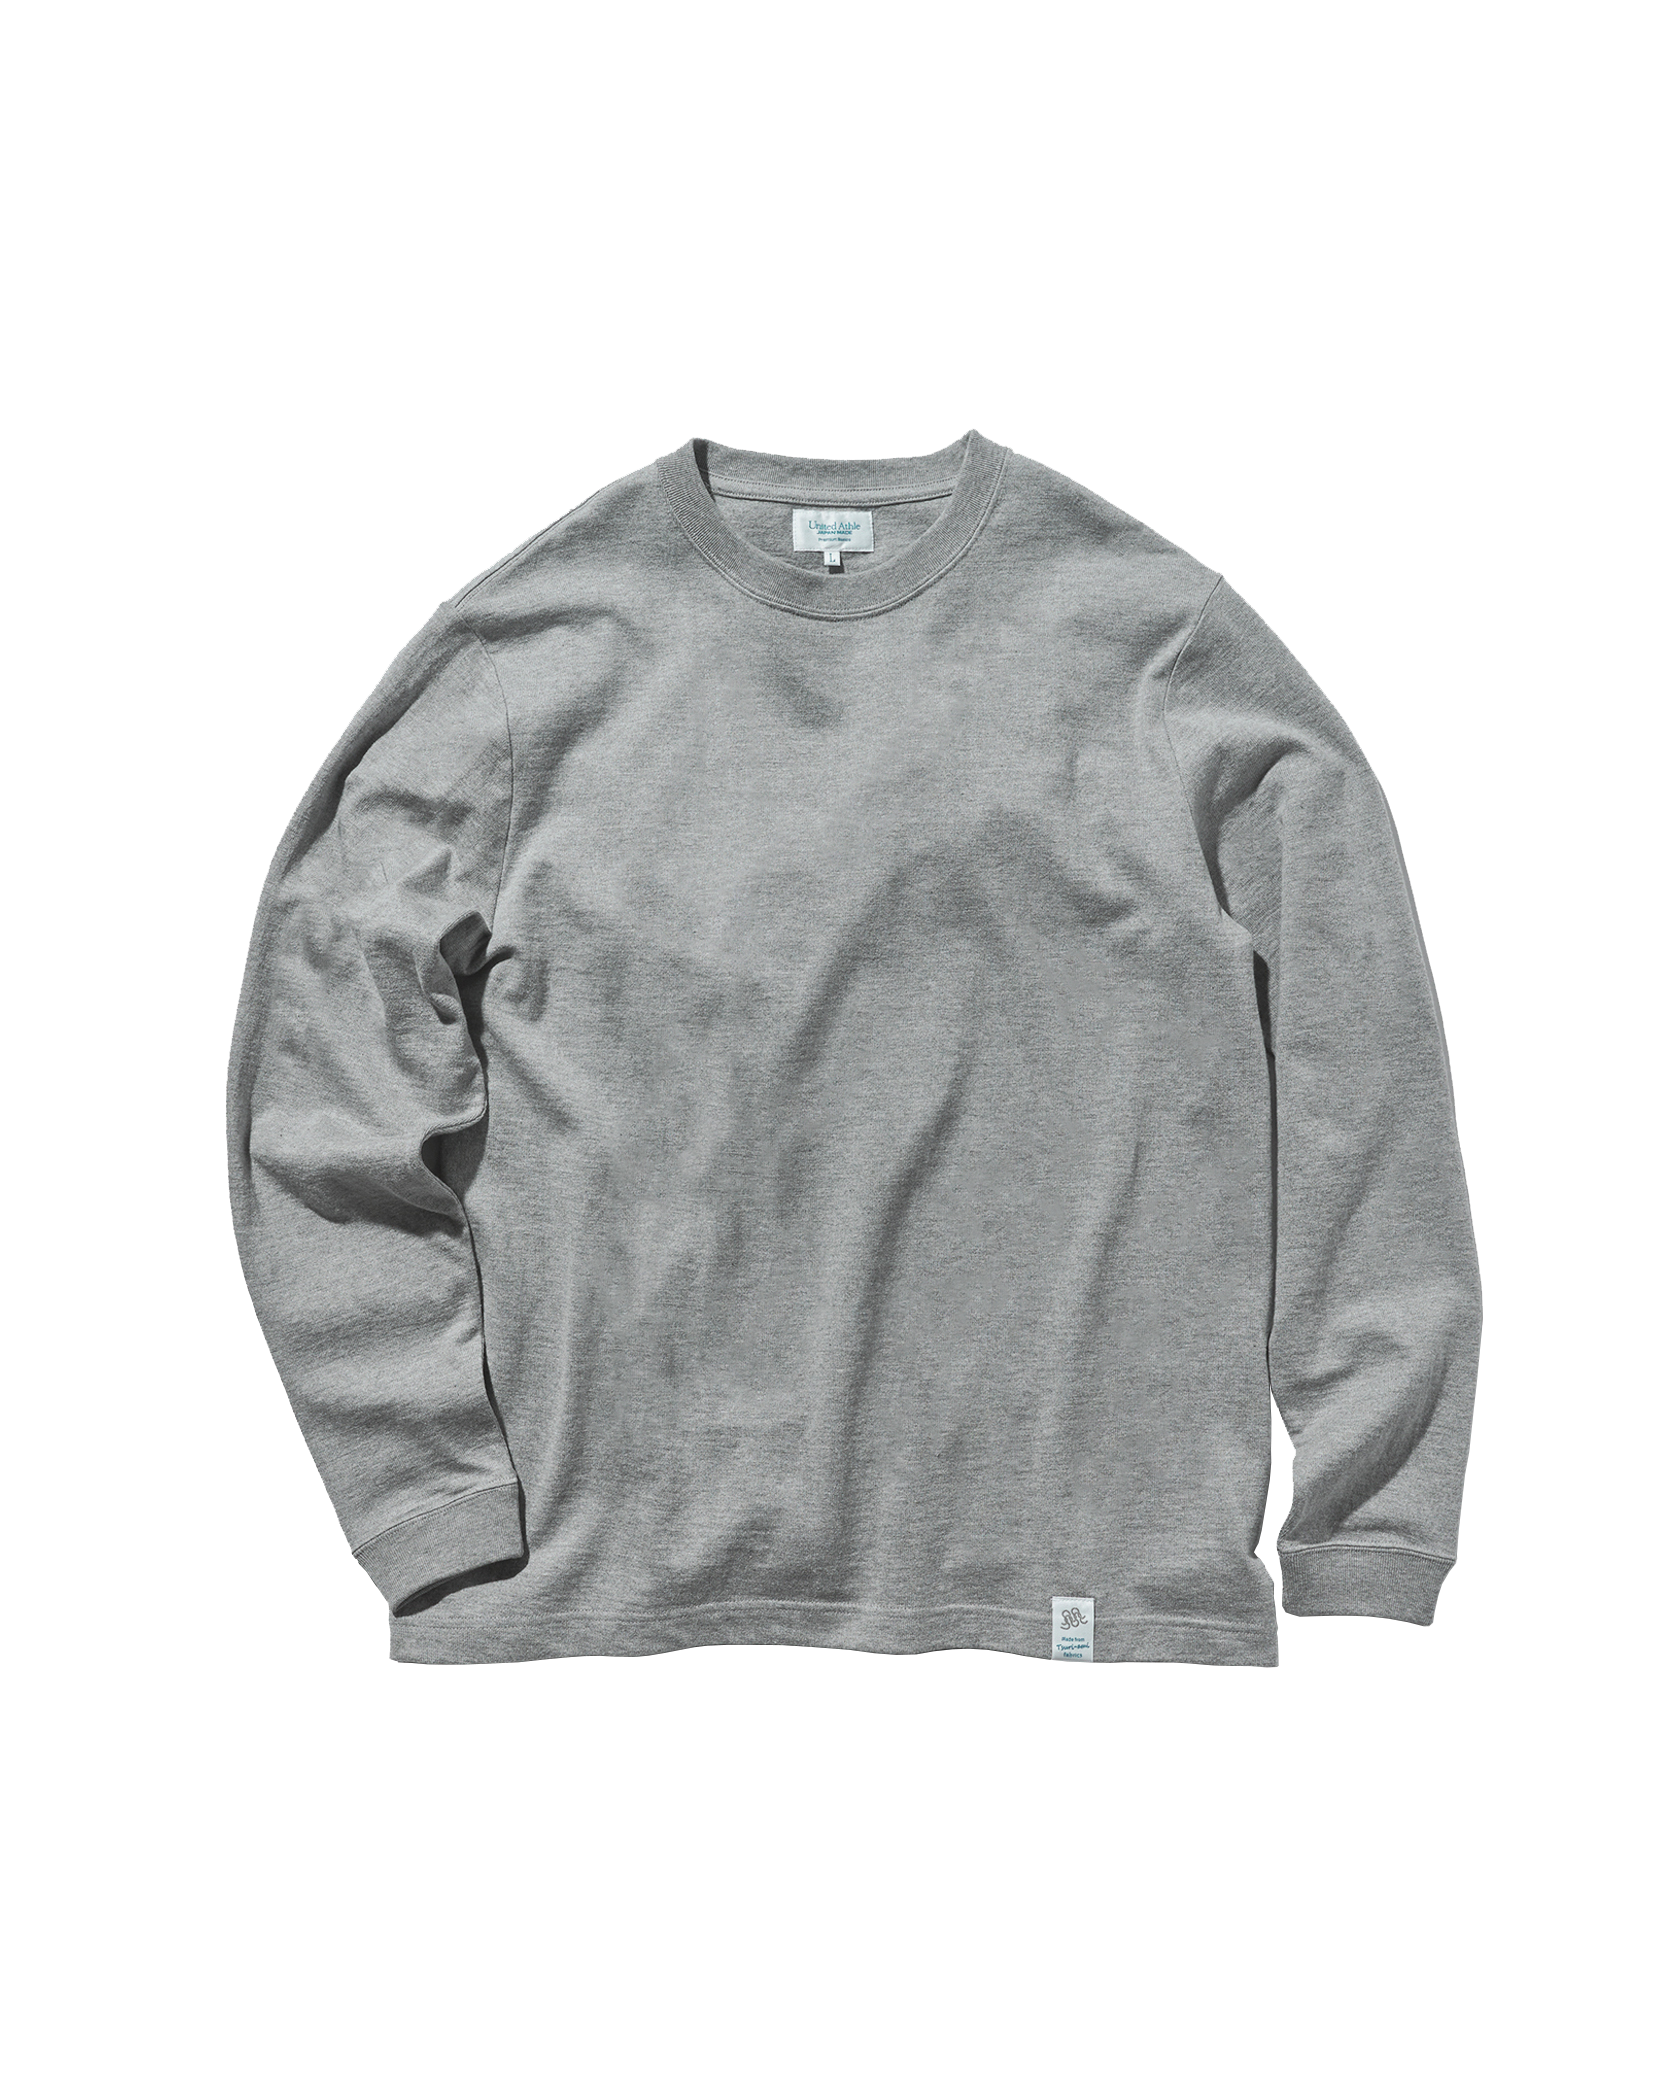 80004 - Japan Made - Standard Fit Long Sleeve T-shirt - Grey x 1